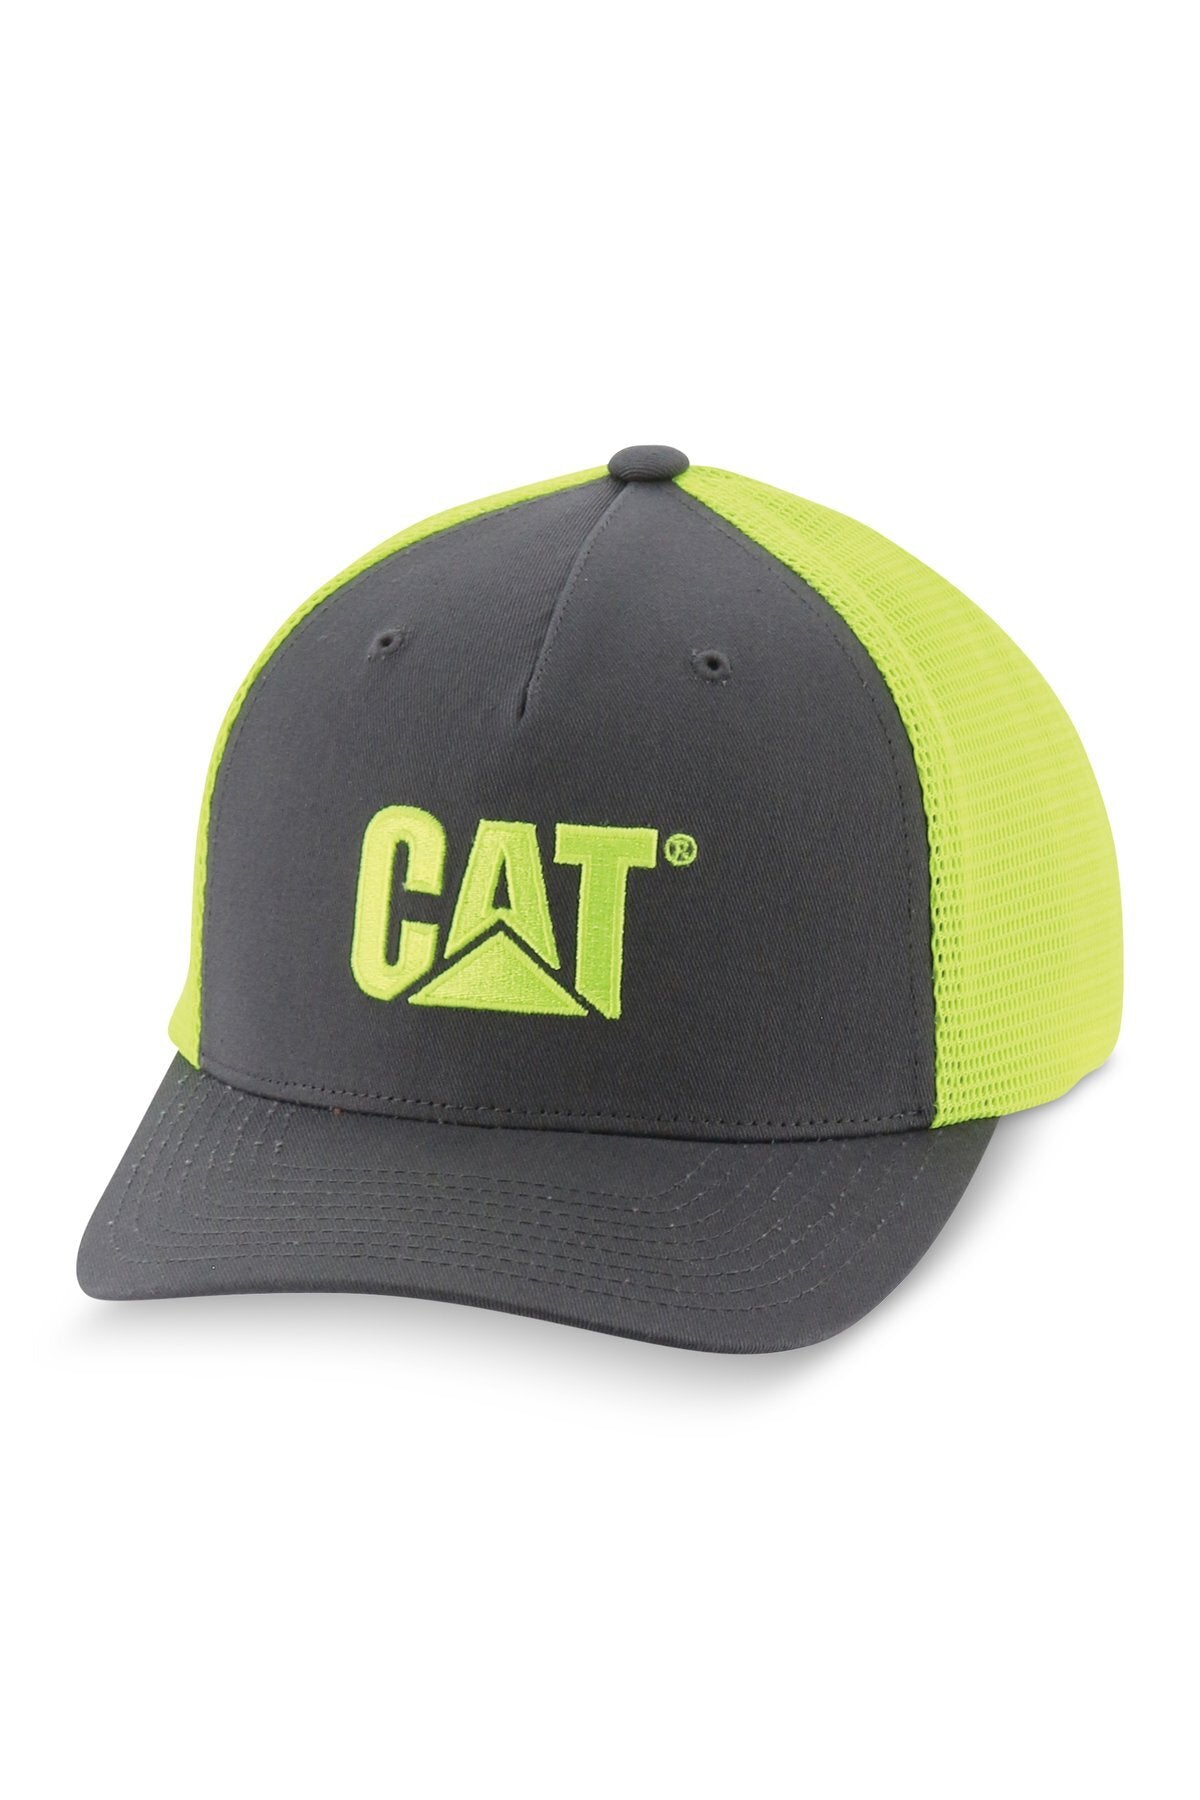 CAT Hi-Vis Mesh Caps